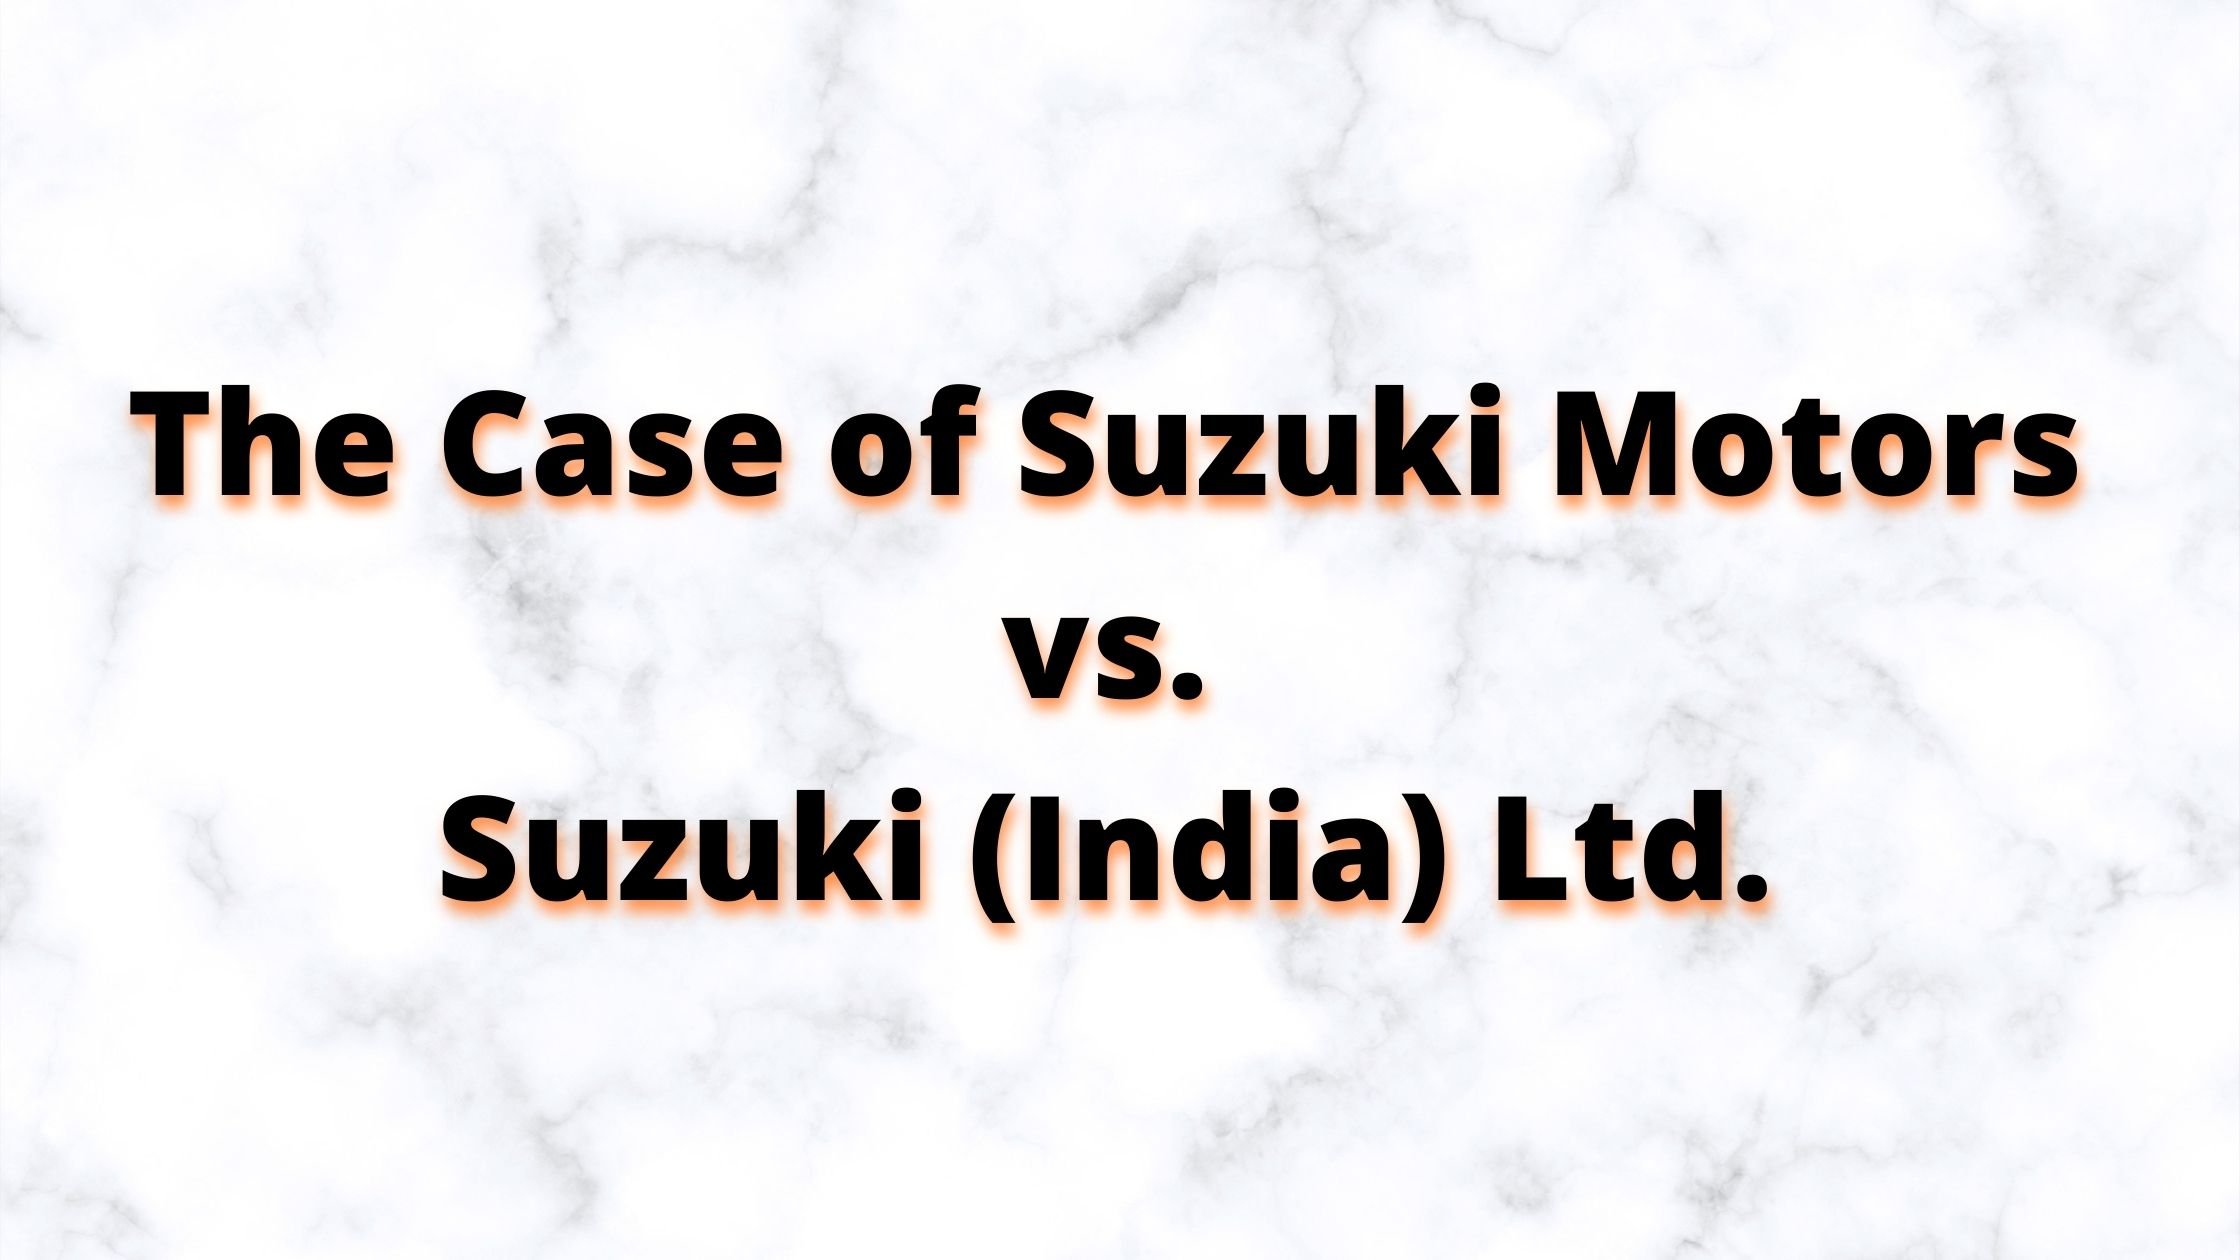 The Case of Suzuki Motors vs. Suzuki (India) Ltd.